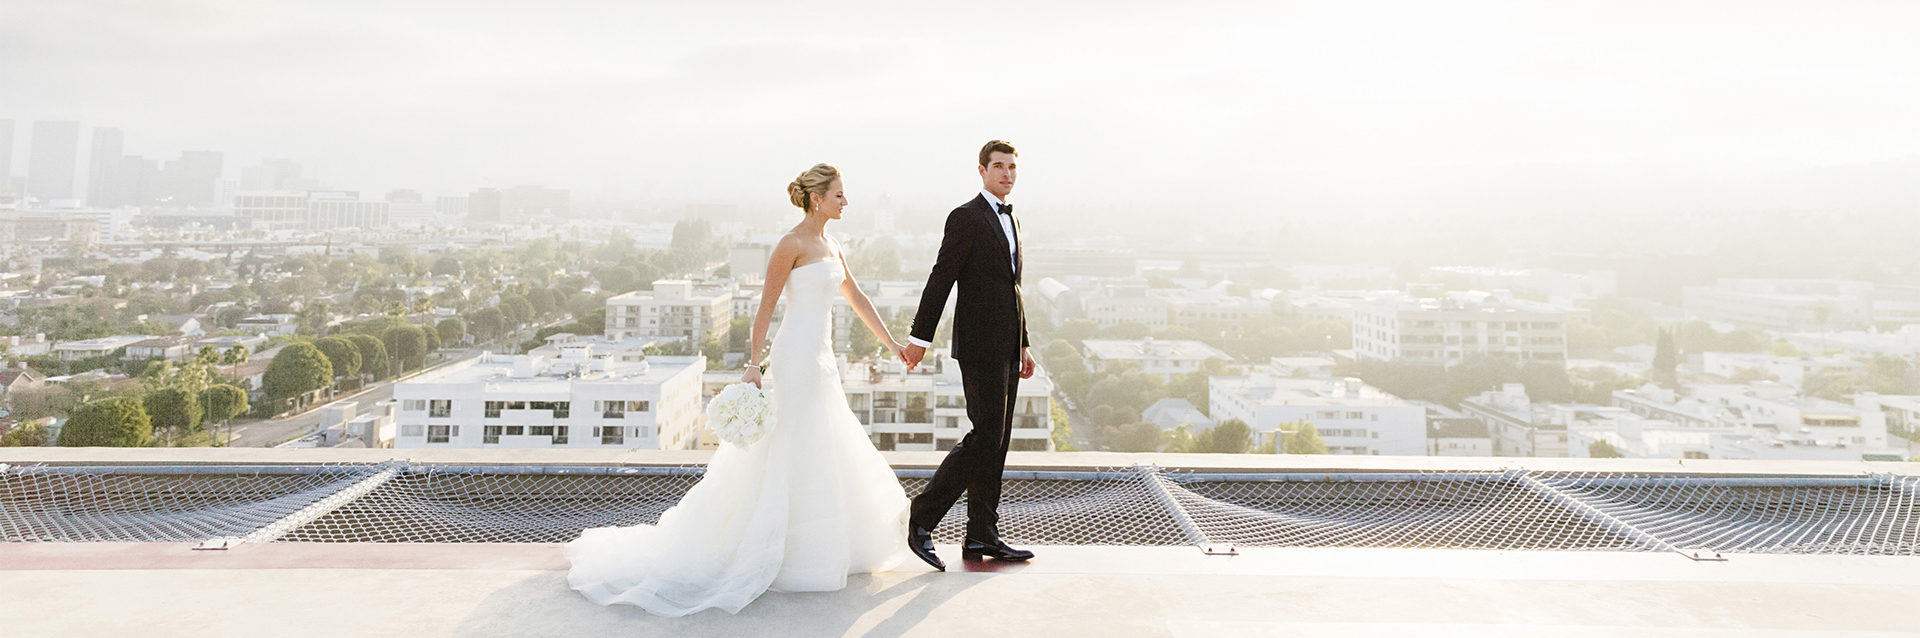 Wedding shoes idea; Featured Photographer: Jana Williams Photography  #weddingshoe #weddingshoes